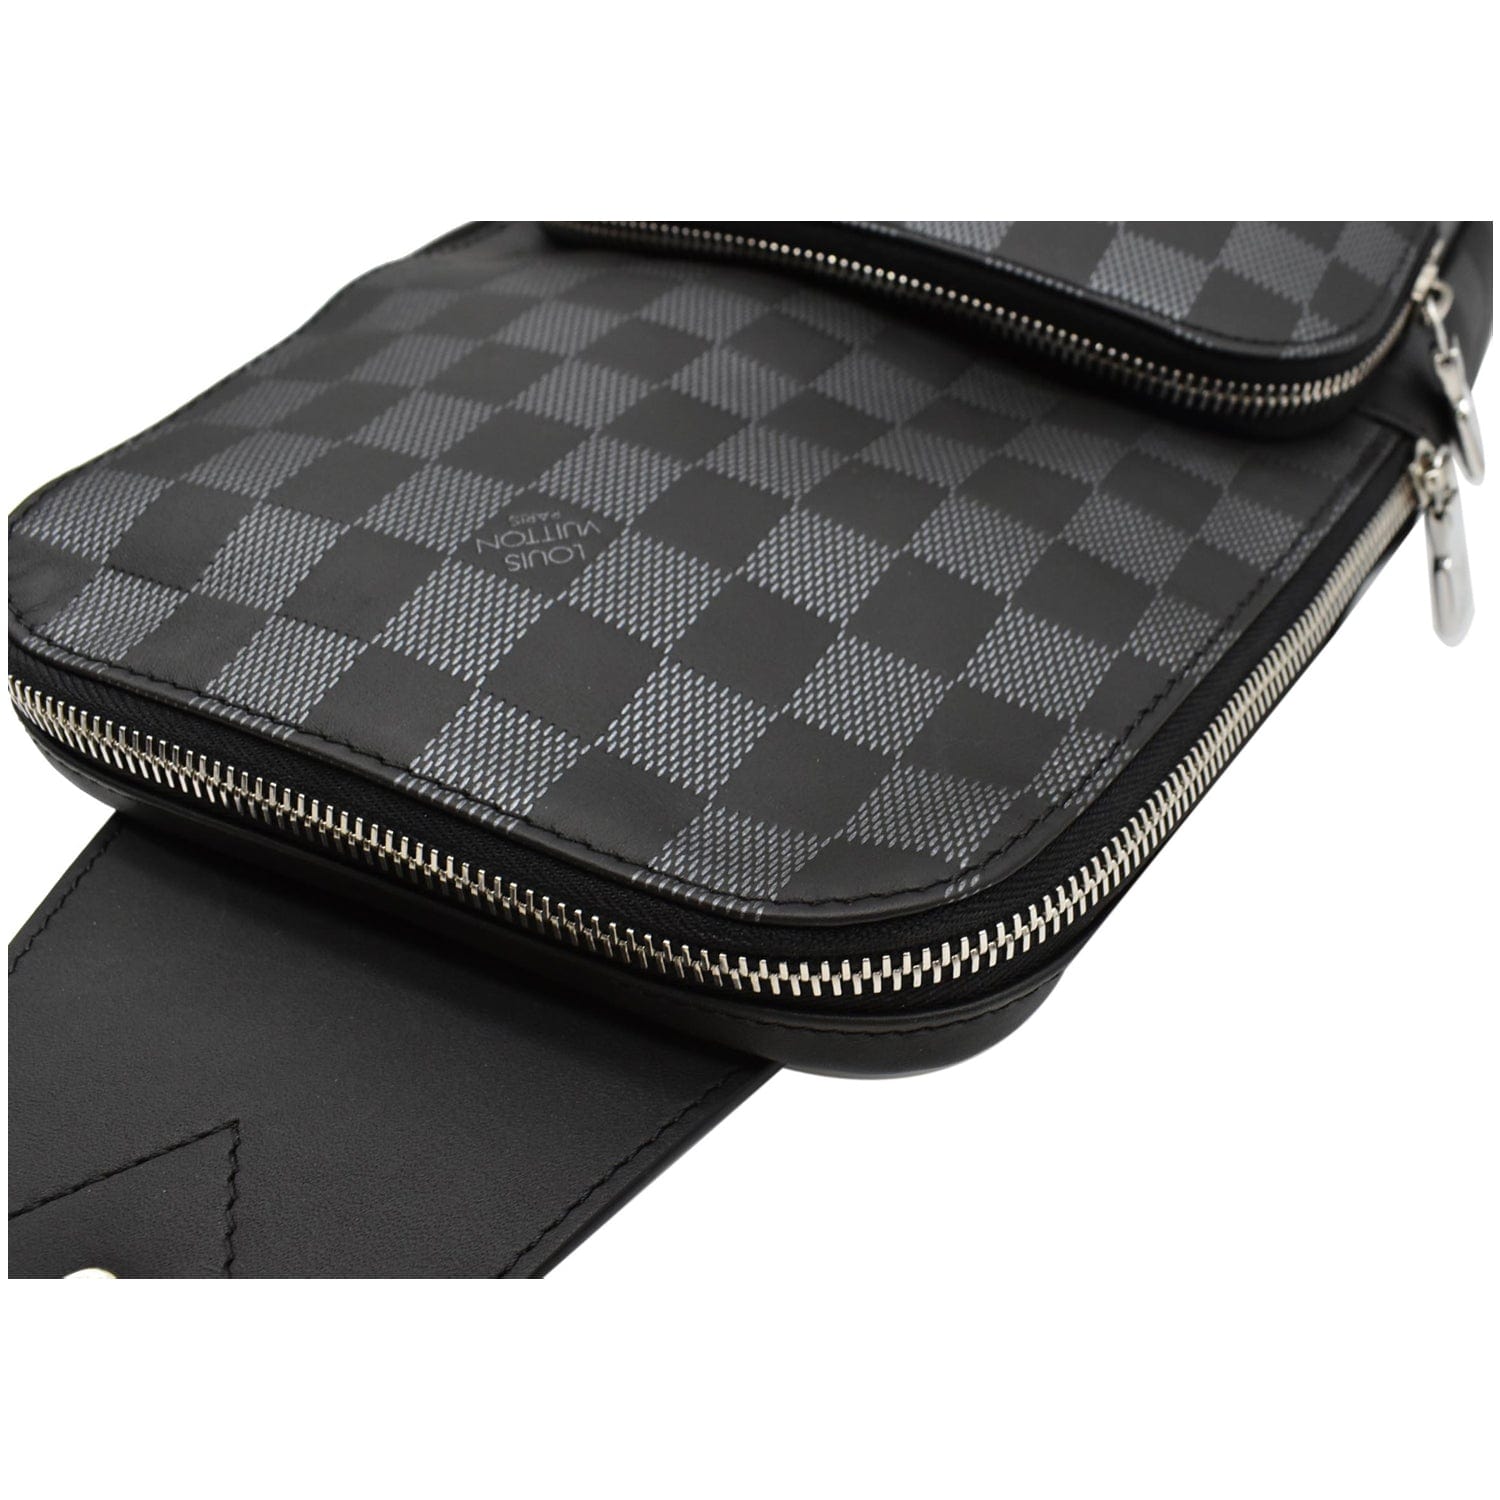 Louis Vuitton Avenue Sling Damier Graphite Crossbody Bag